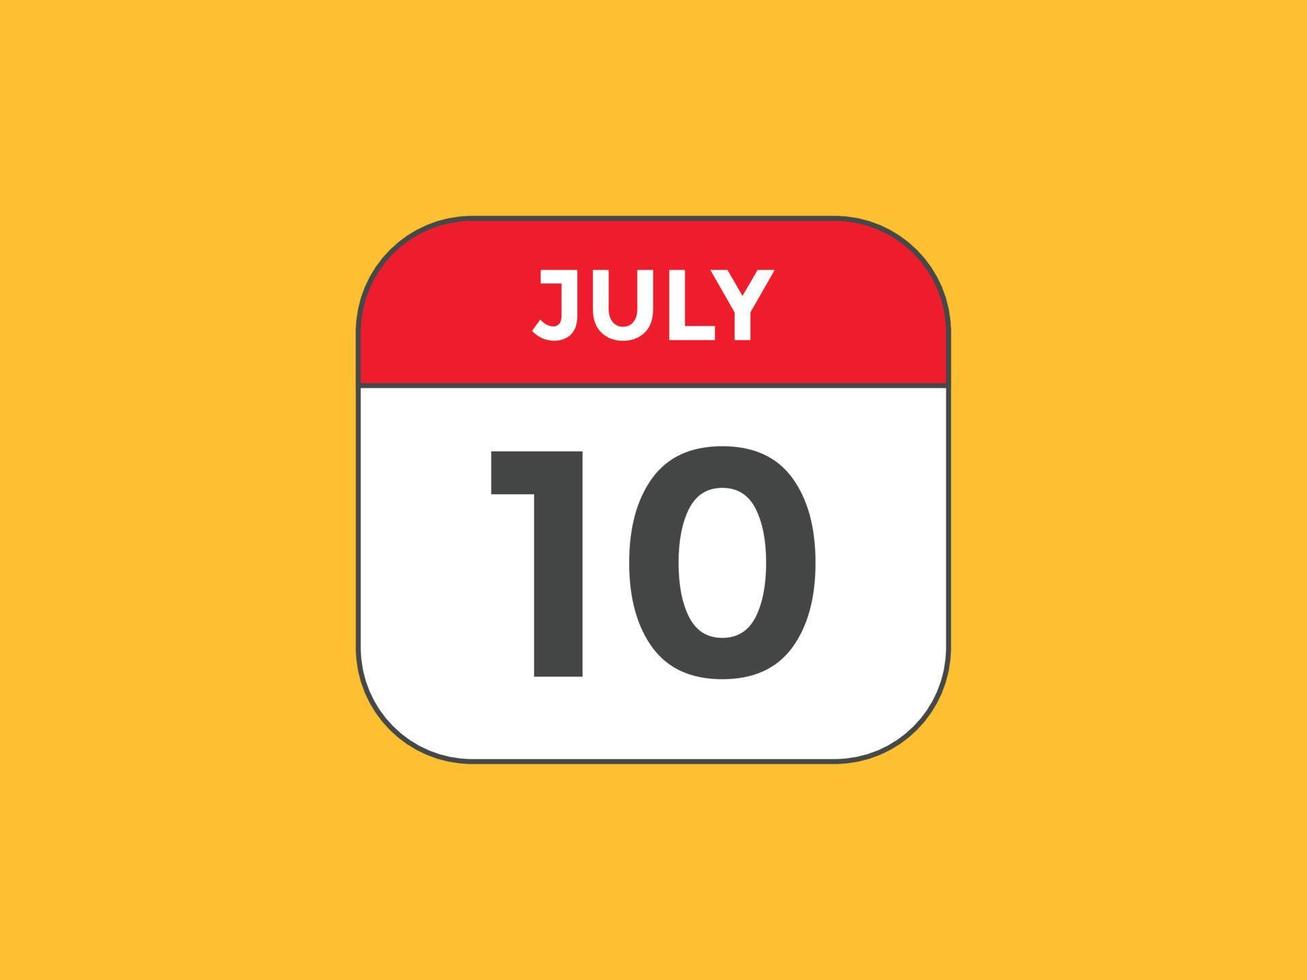 july 10 calendar reminder. 10th july daily calendar icon template. Calendar 10th july icon Design template. Vector illustration